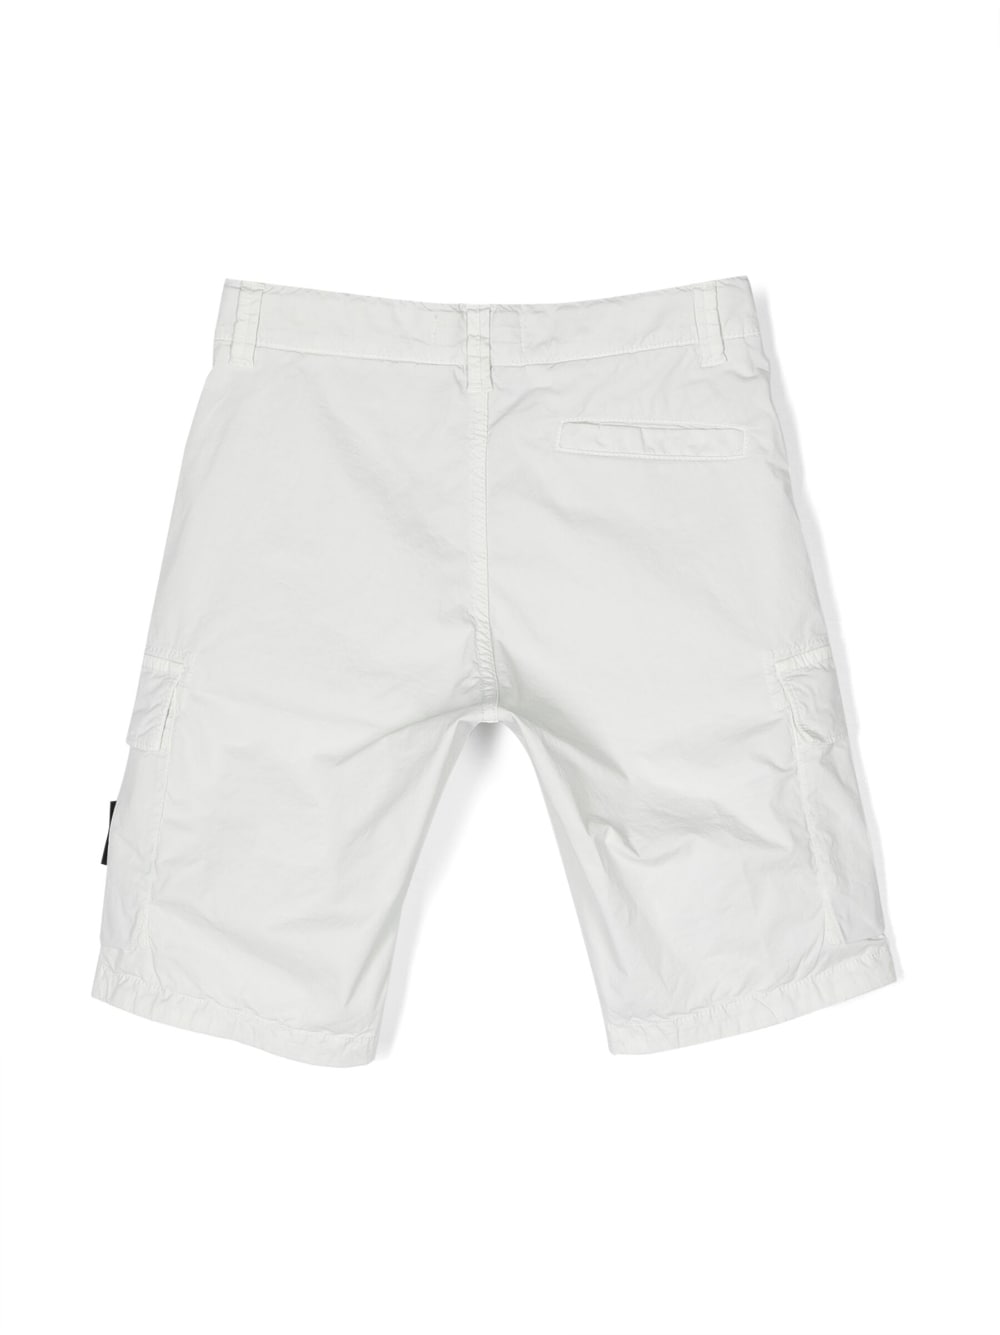 Gray Bermuda shorts for boys with logo